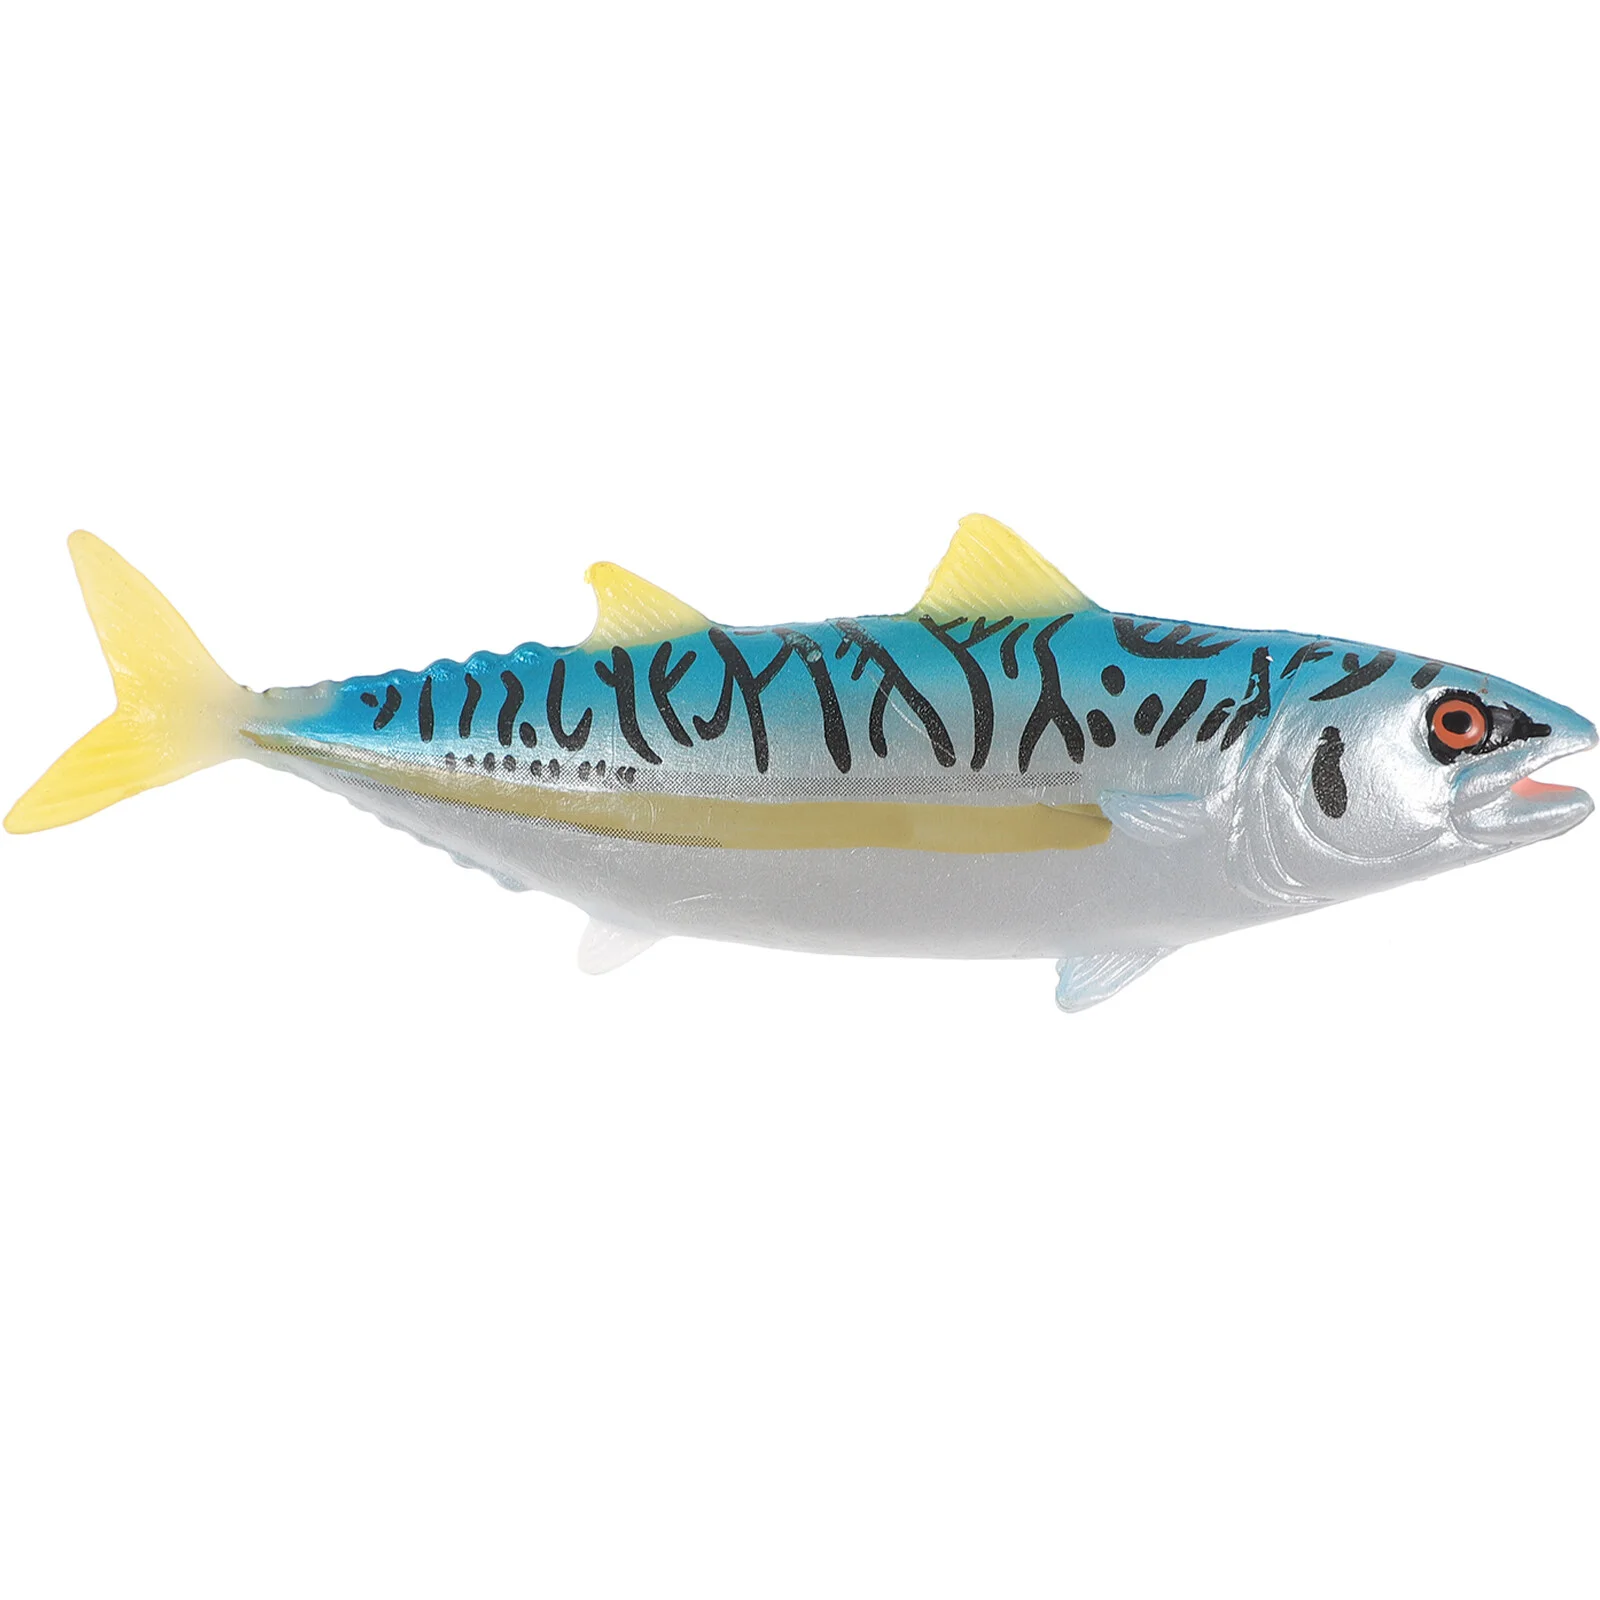 

Simulated Tuna Desktop Fish Statue Simulation Decoration Figurine Ornaments Realistic Craft Miniature Animal Figurines